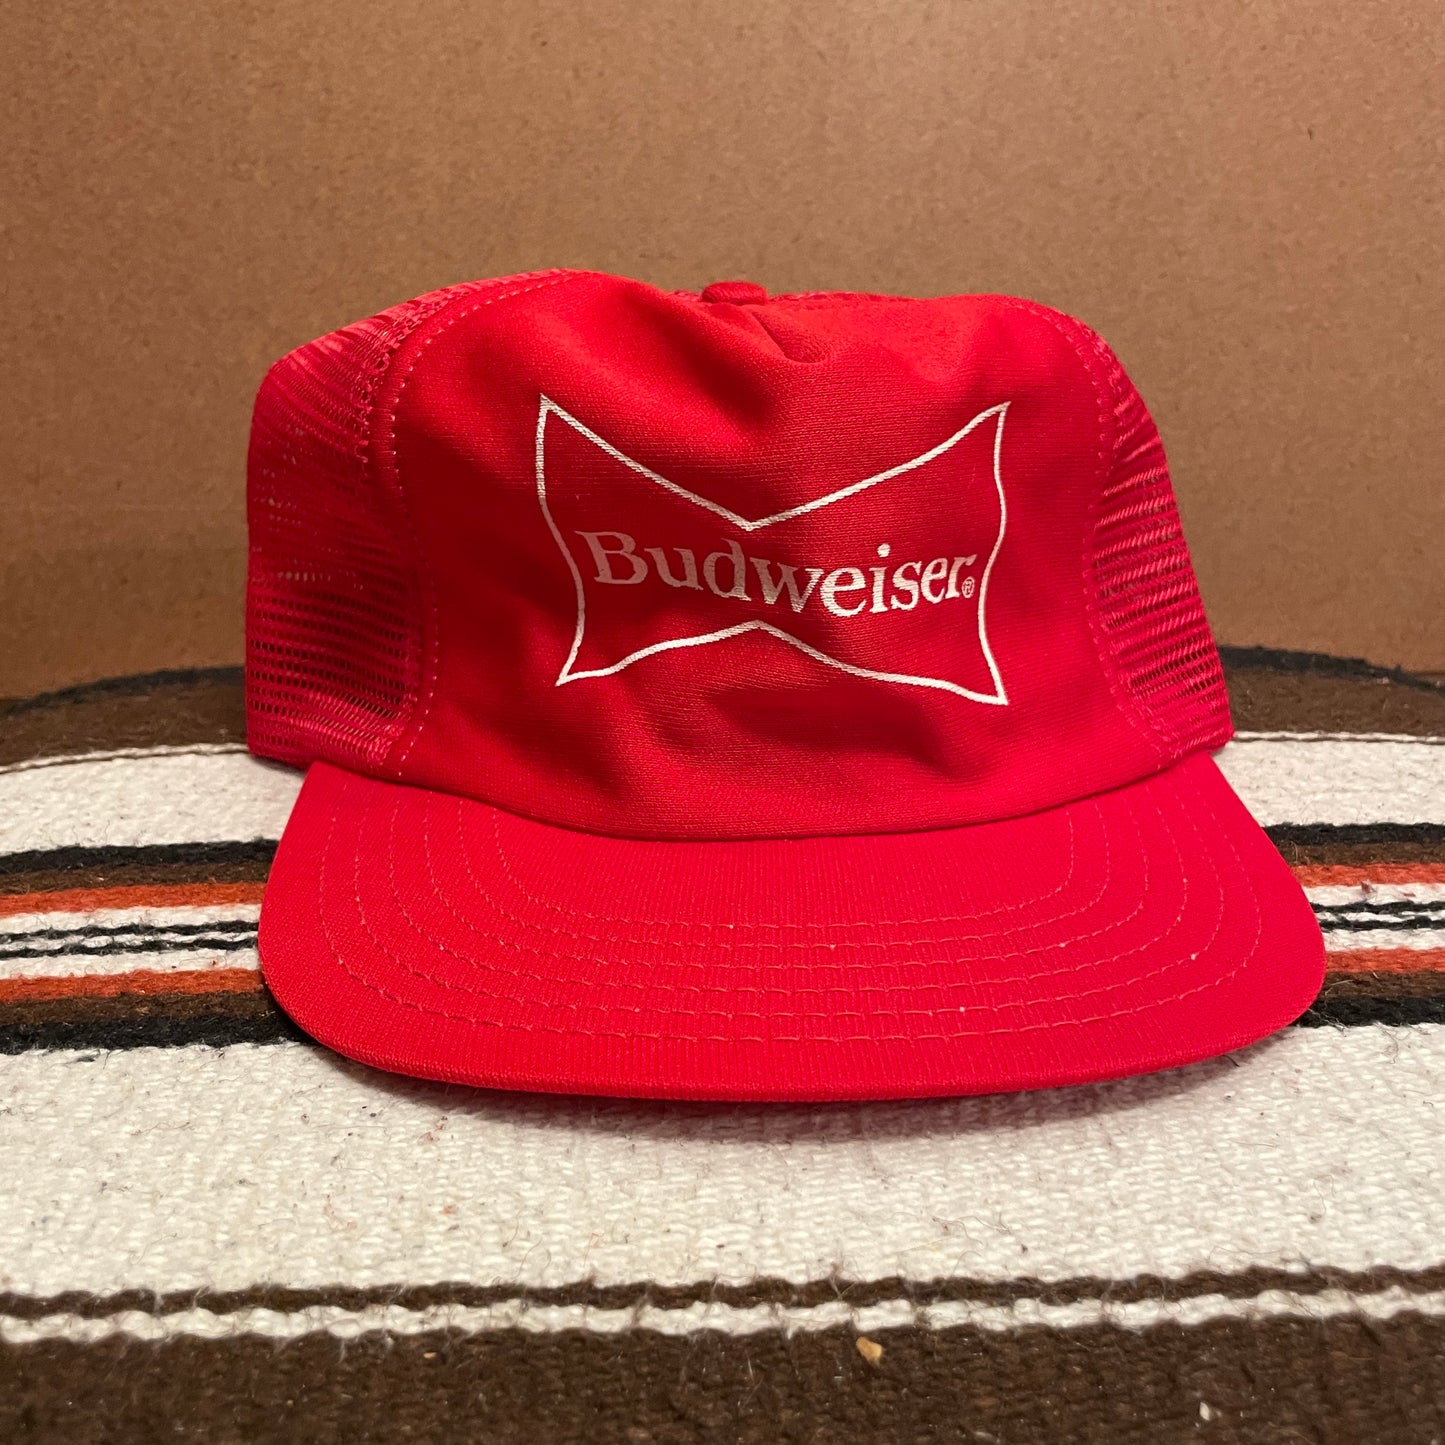 Budweiser Bowtie Fabric Trucker Hat